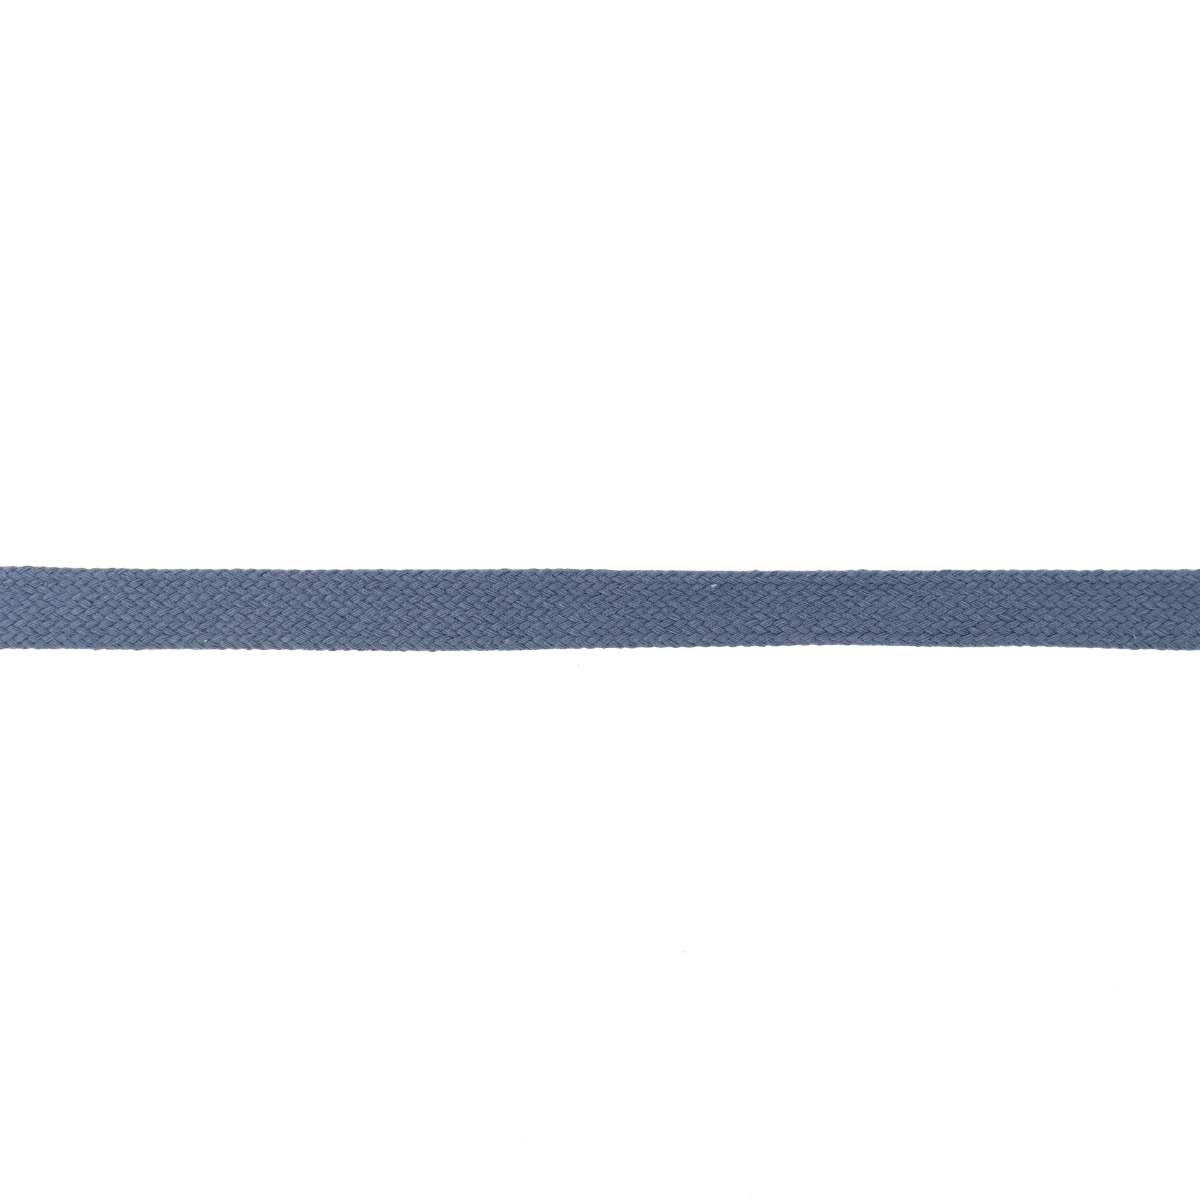 Hoodieband Kapuzenkordel 15 mm Rauchblau